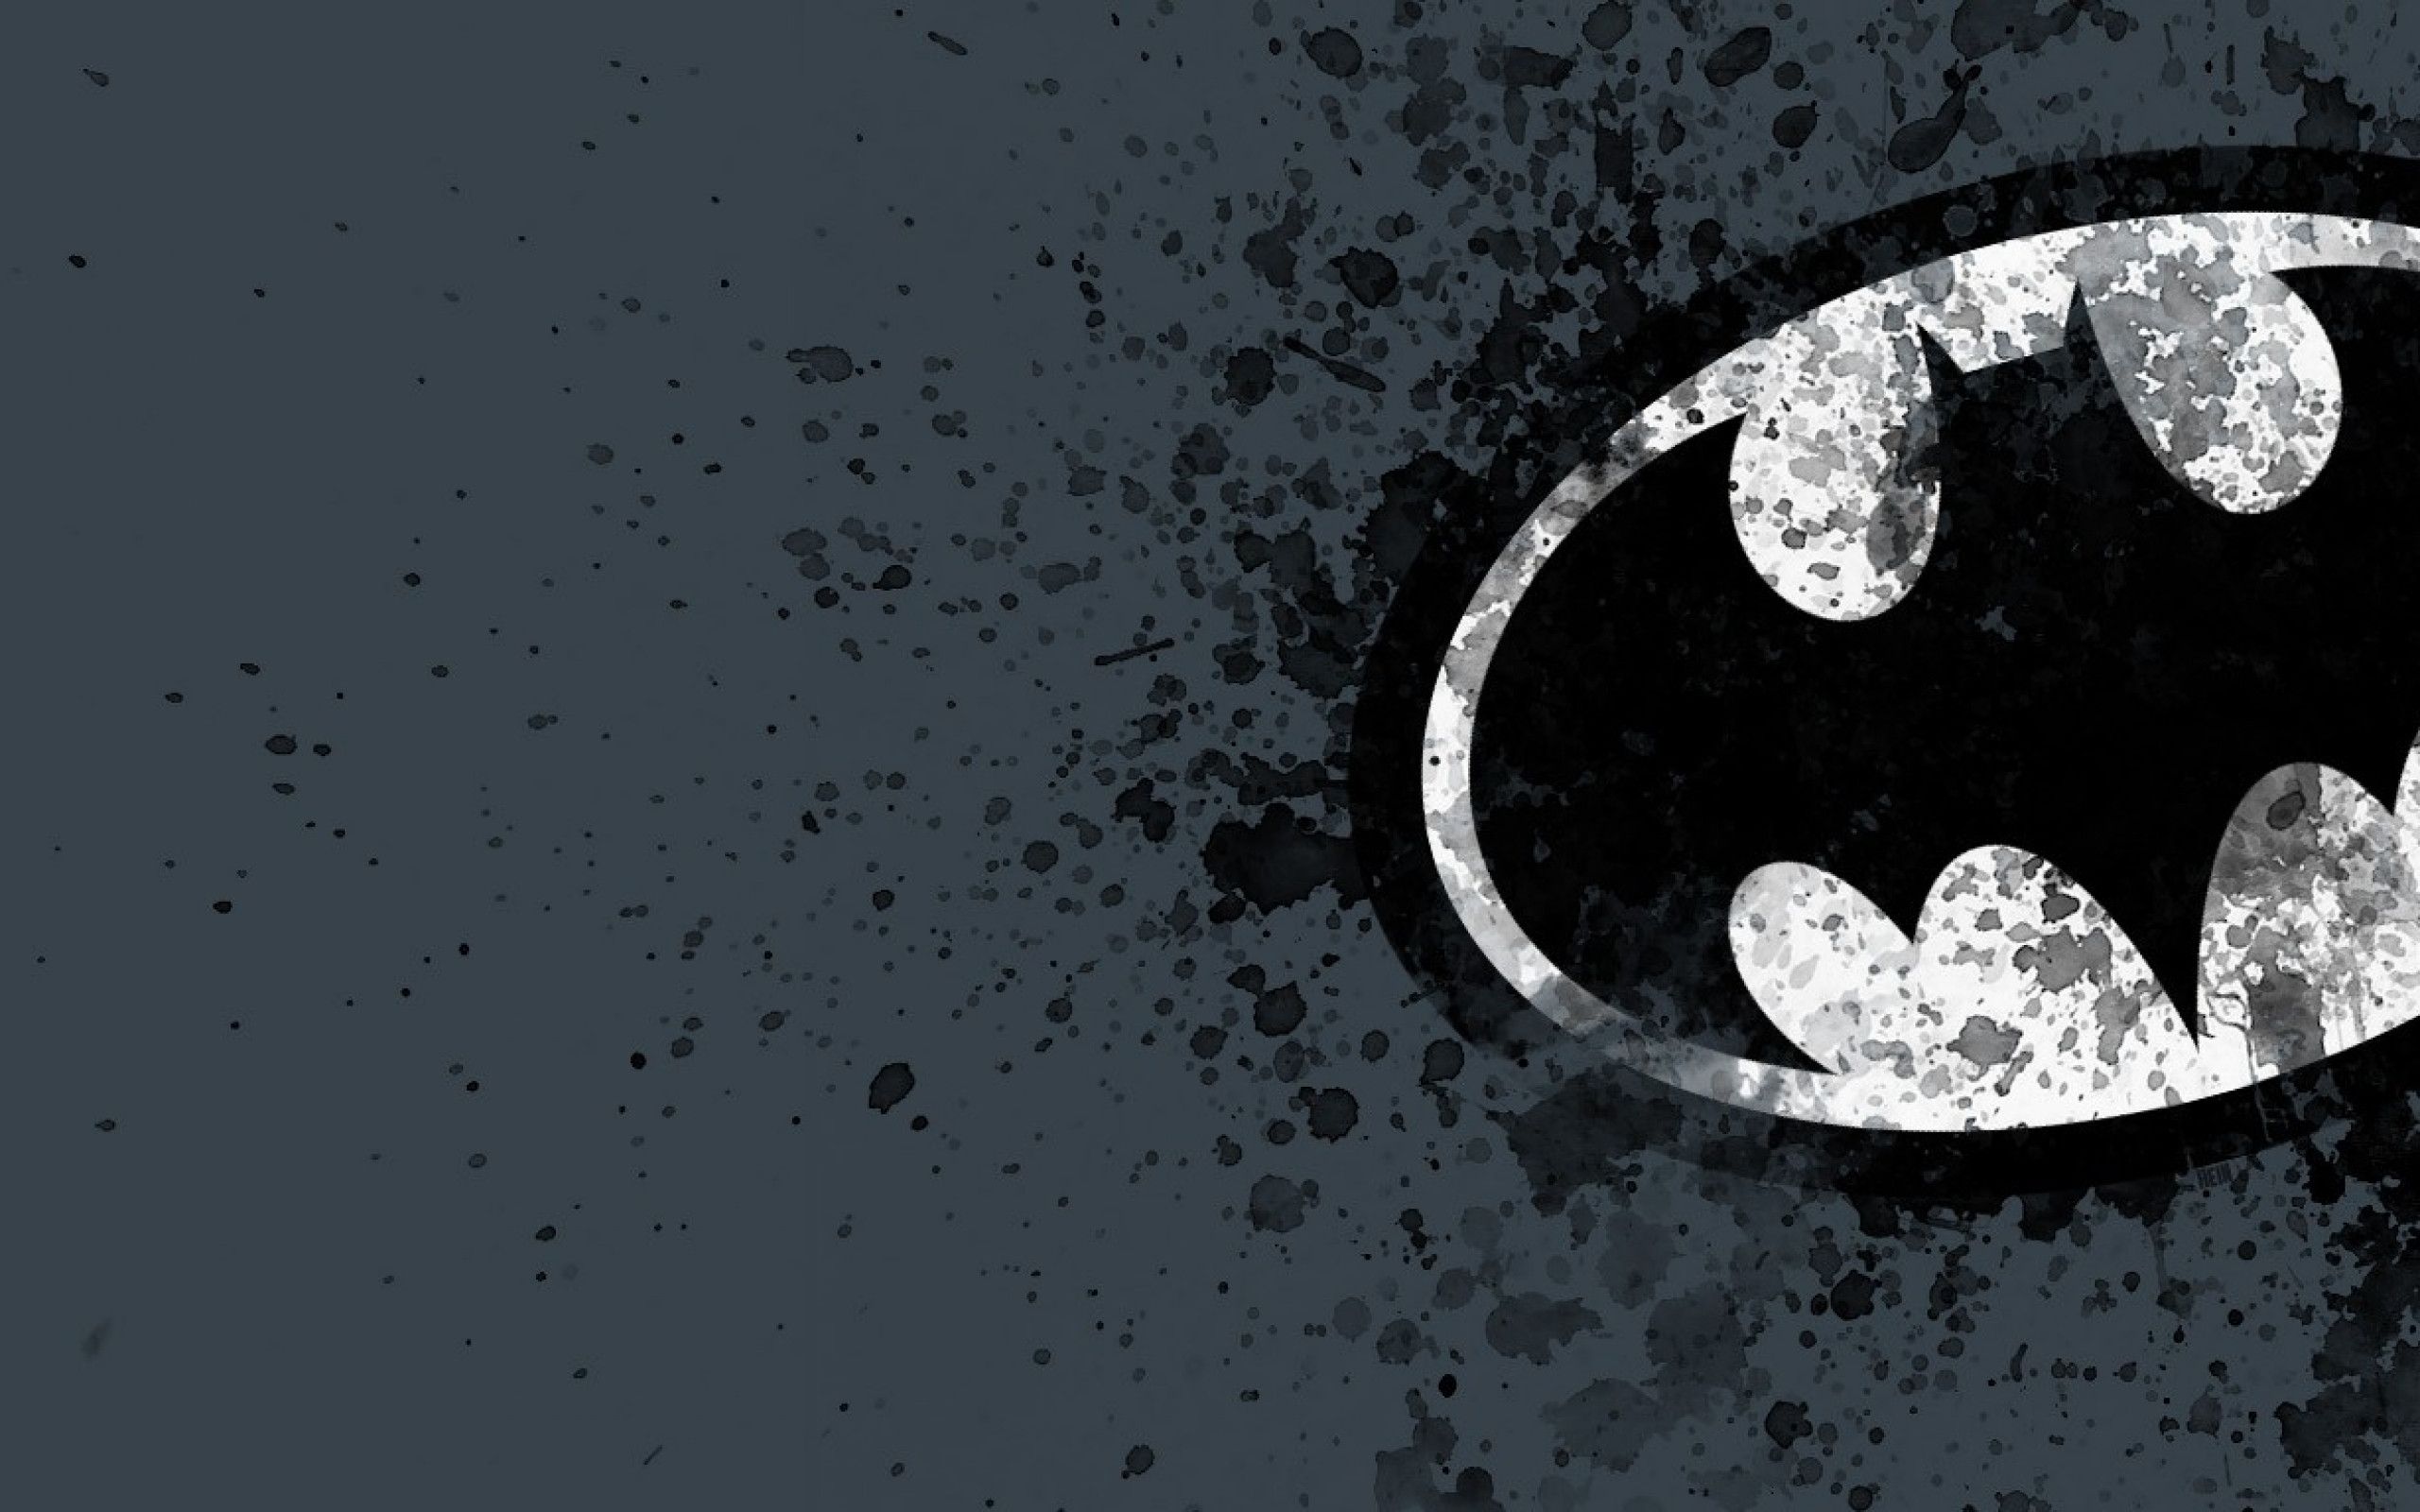 46+] Batman Logo Wallpaper HD - WallpaperSafari